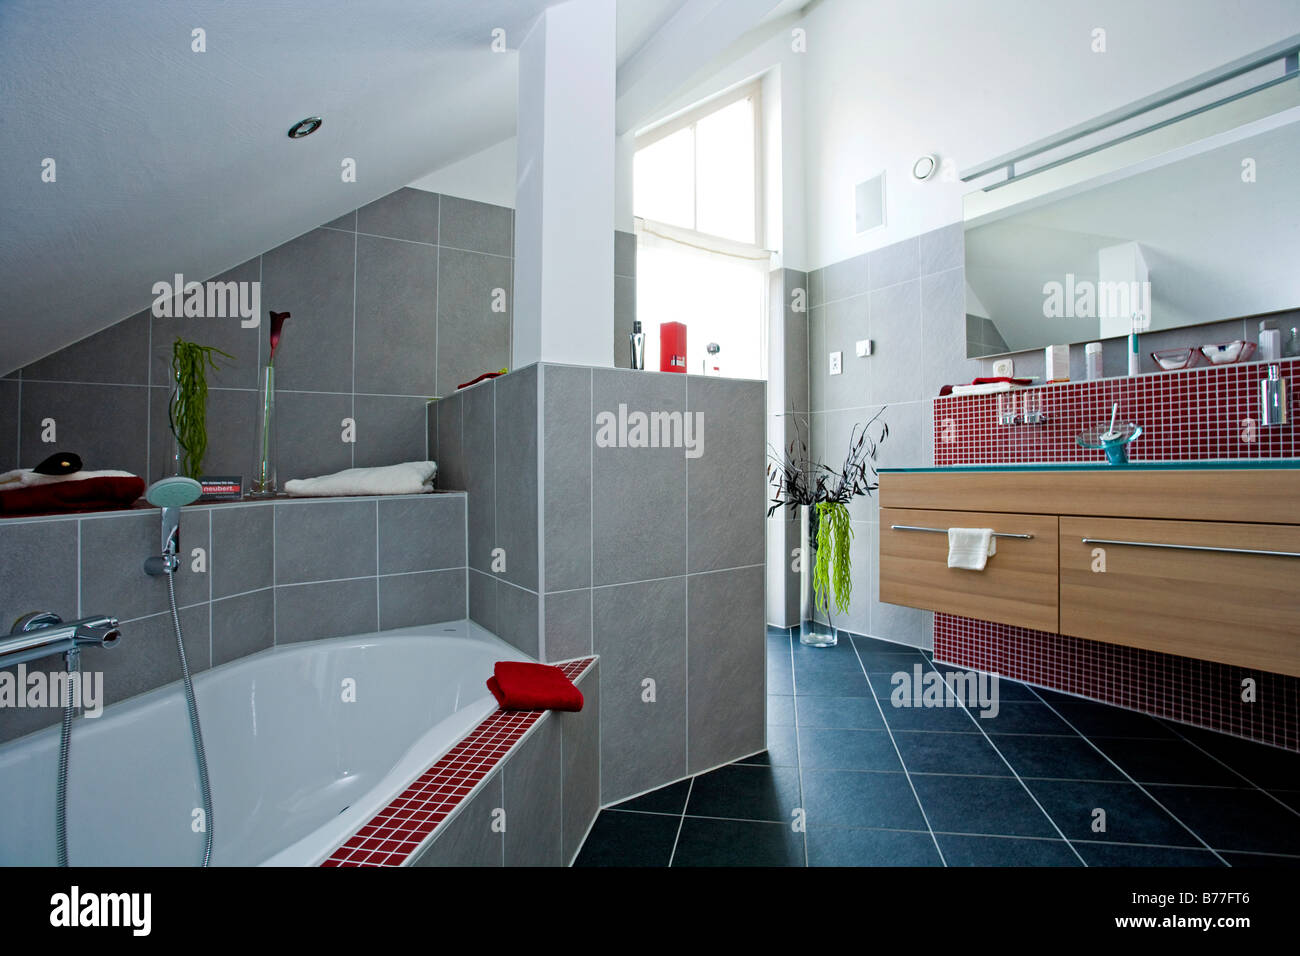 Modernes Badezimmer, modern bath room Stock Photo